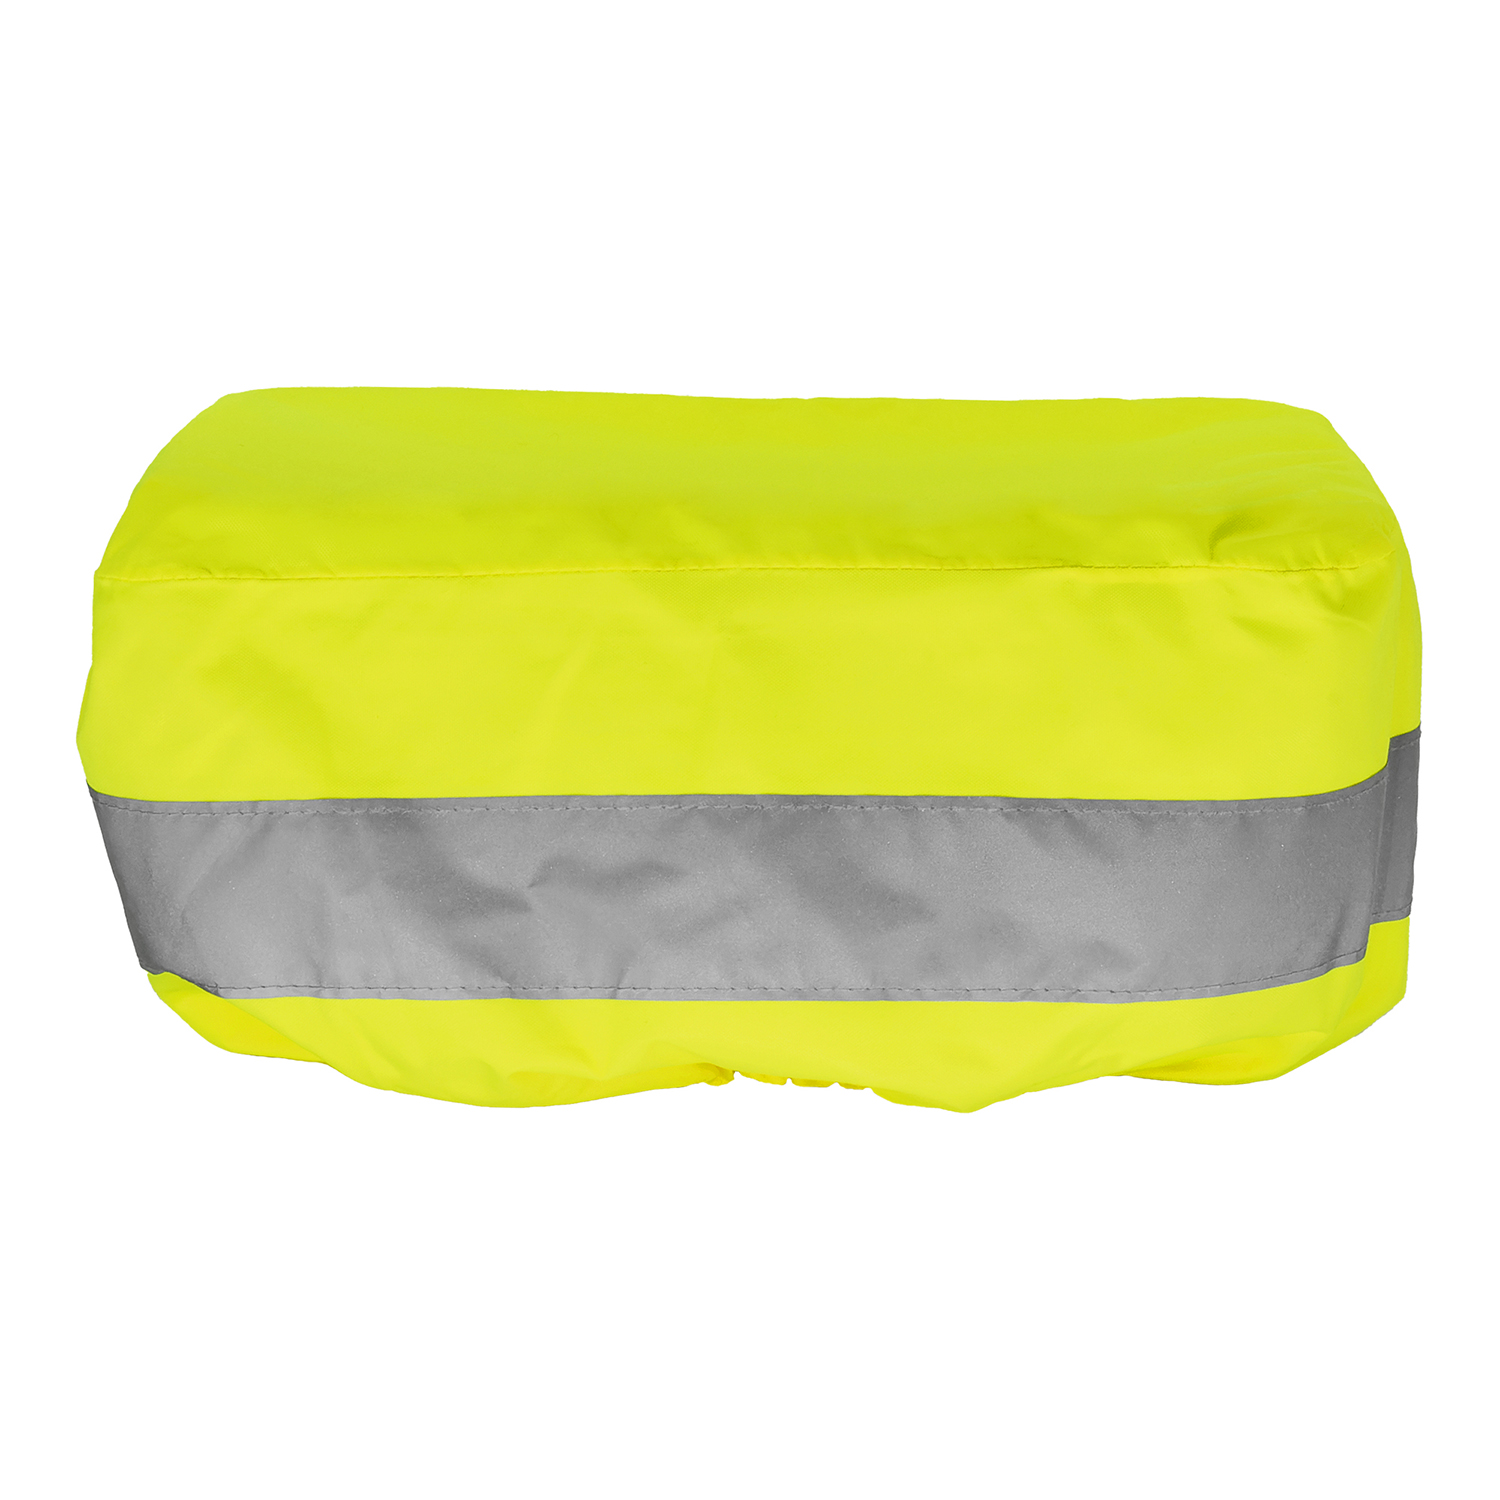 4-Act Regenschutz Korb 40 x 30cm - Fluor Gelb kaufen bei HBS